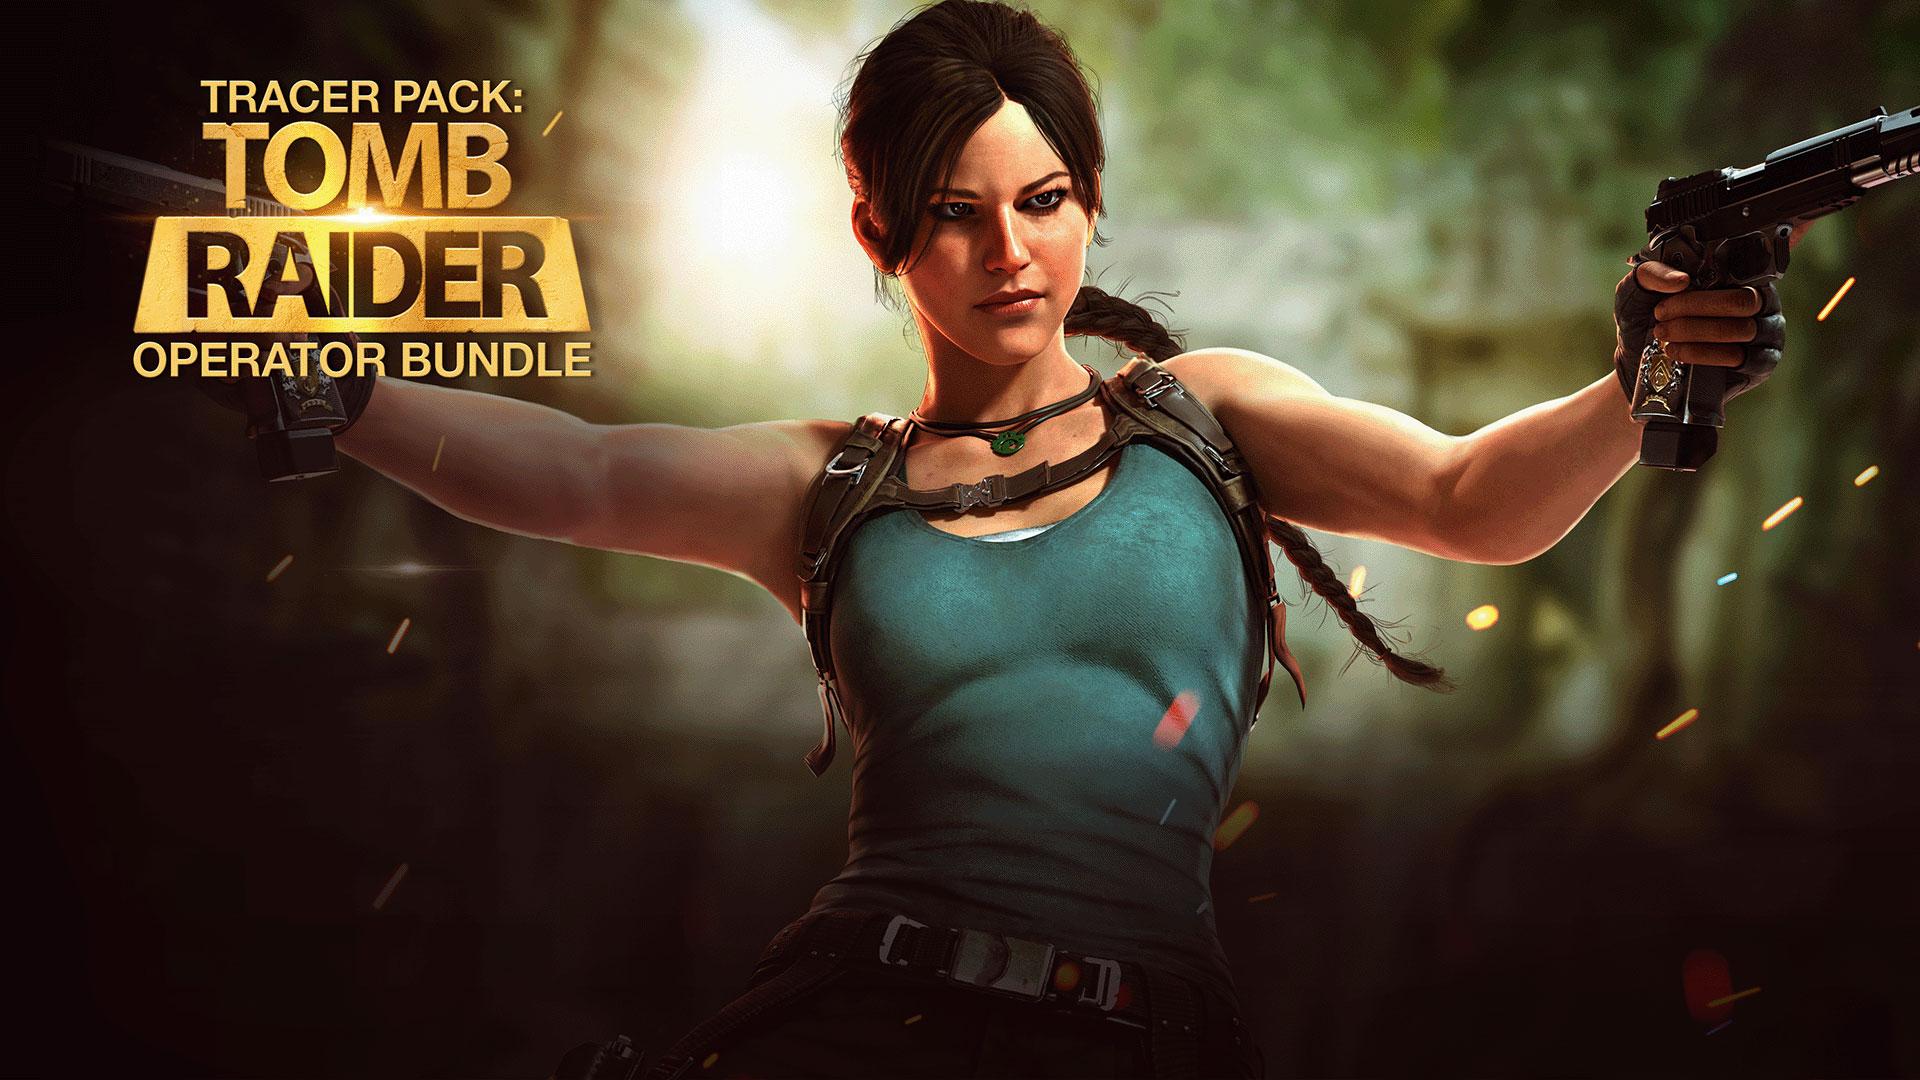 Tracer Pack: Tomb Raider Operator Bundle with Lara Croft